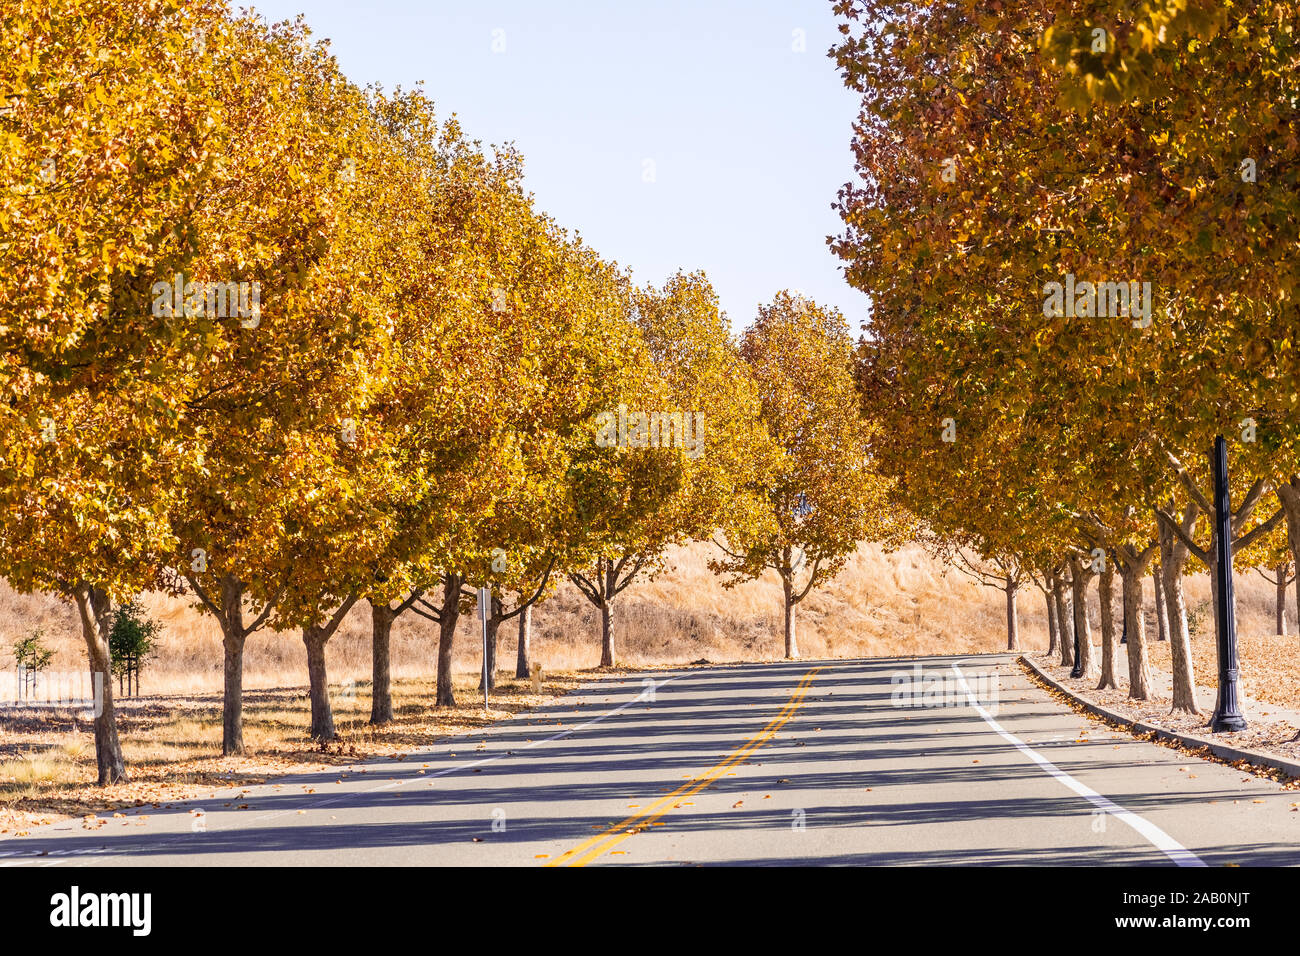 Beautiful fall foliage on a street lined up with London Plane (Platanus × acerifolia) trees; San Francisco bay area, California Stock Photo